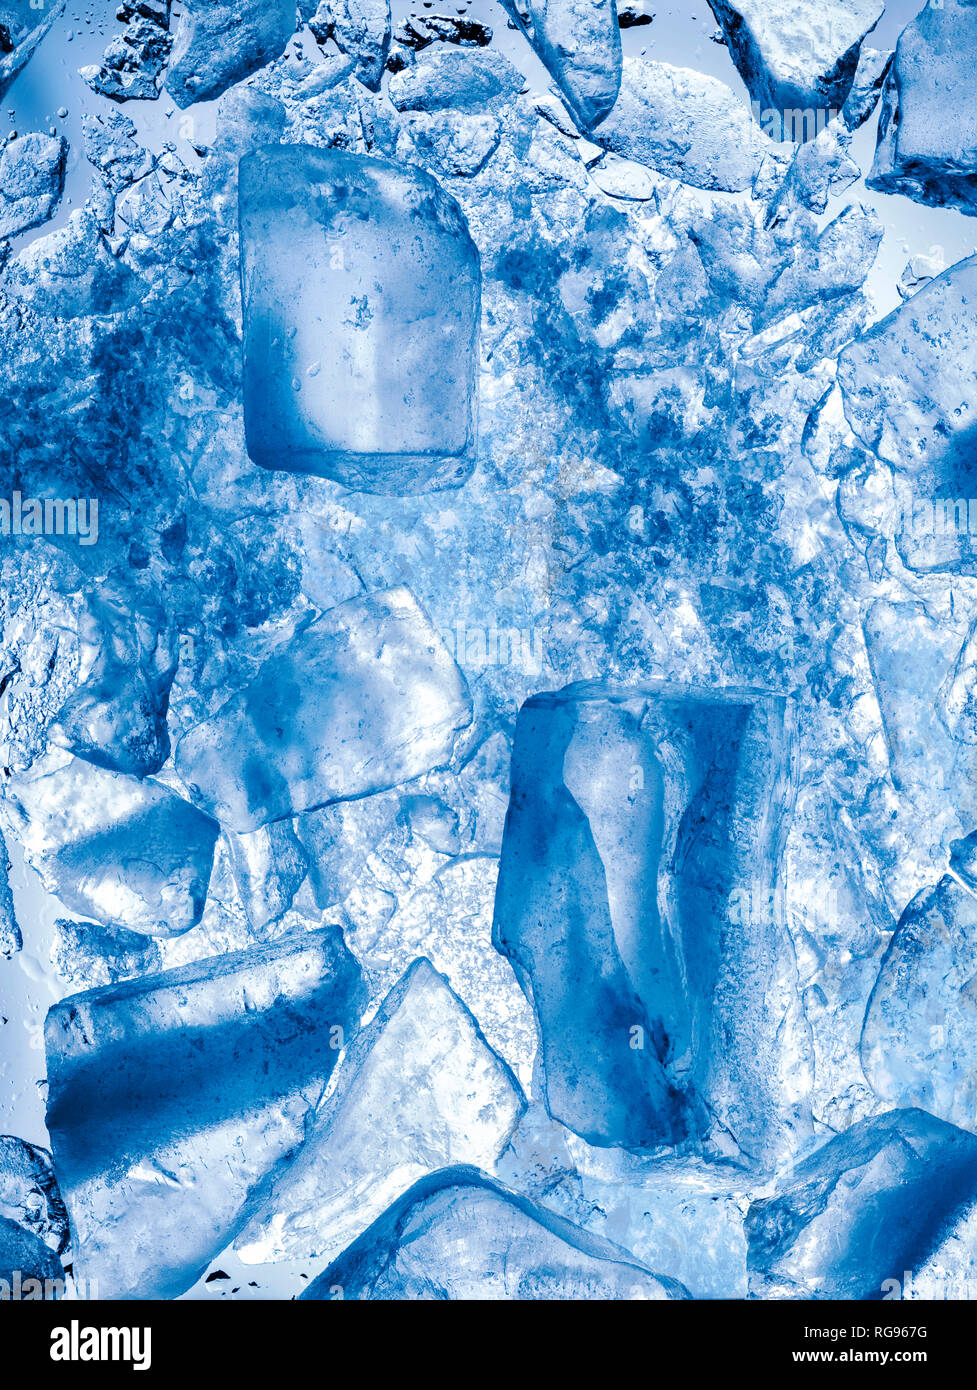 Chunks of ice. Stock Photo